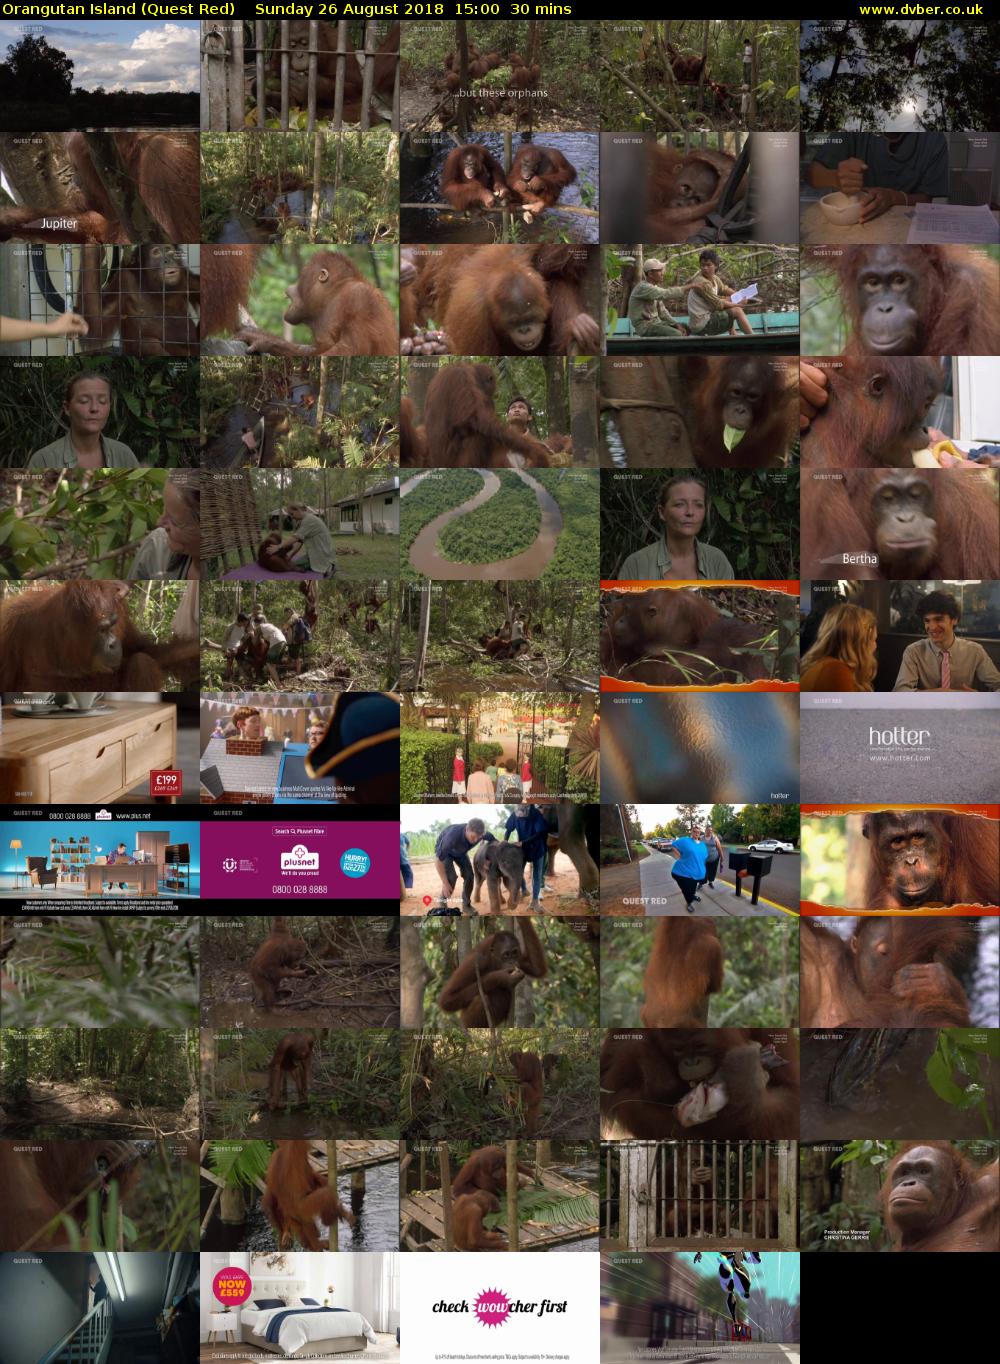 Orangutan Island (Quest Red) Sunday 26 August 2018 15:00 - 15:30